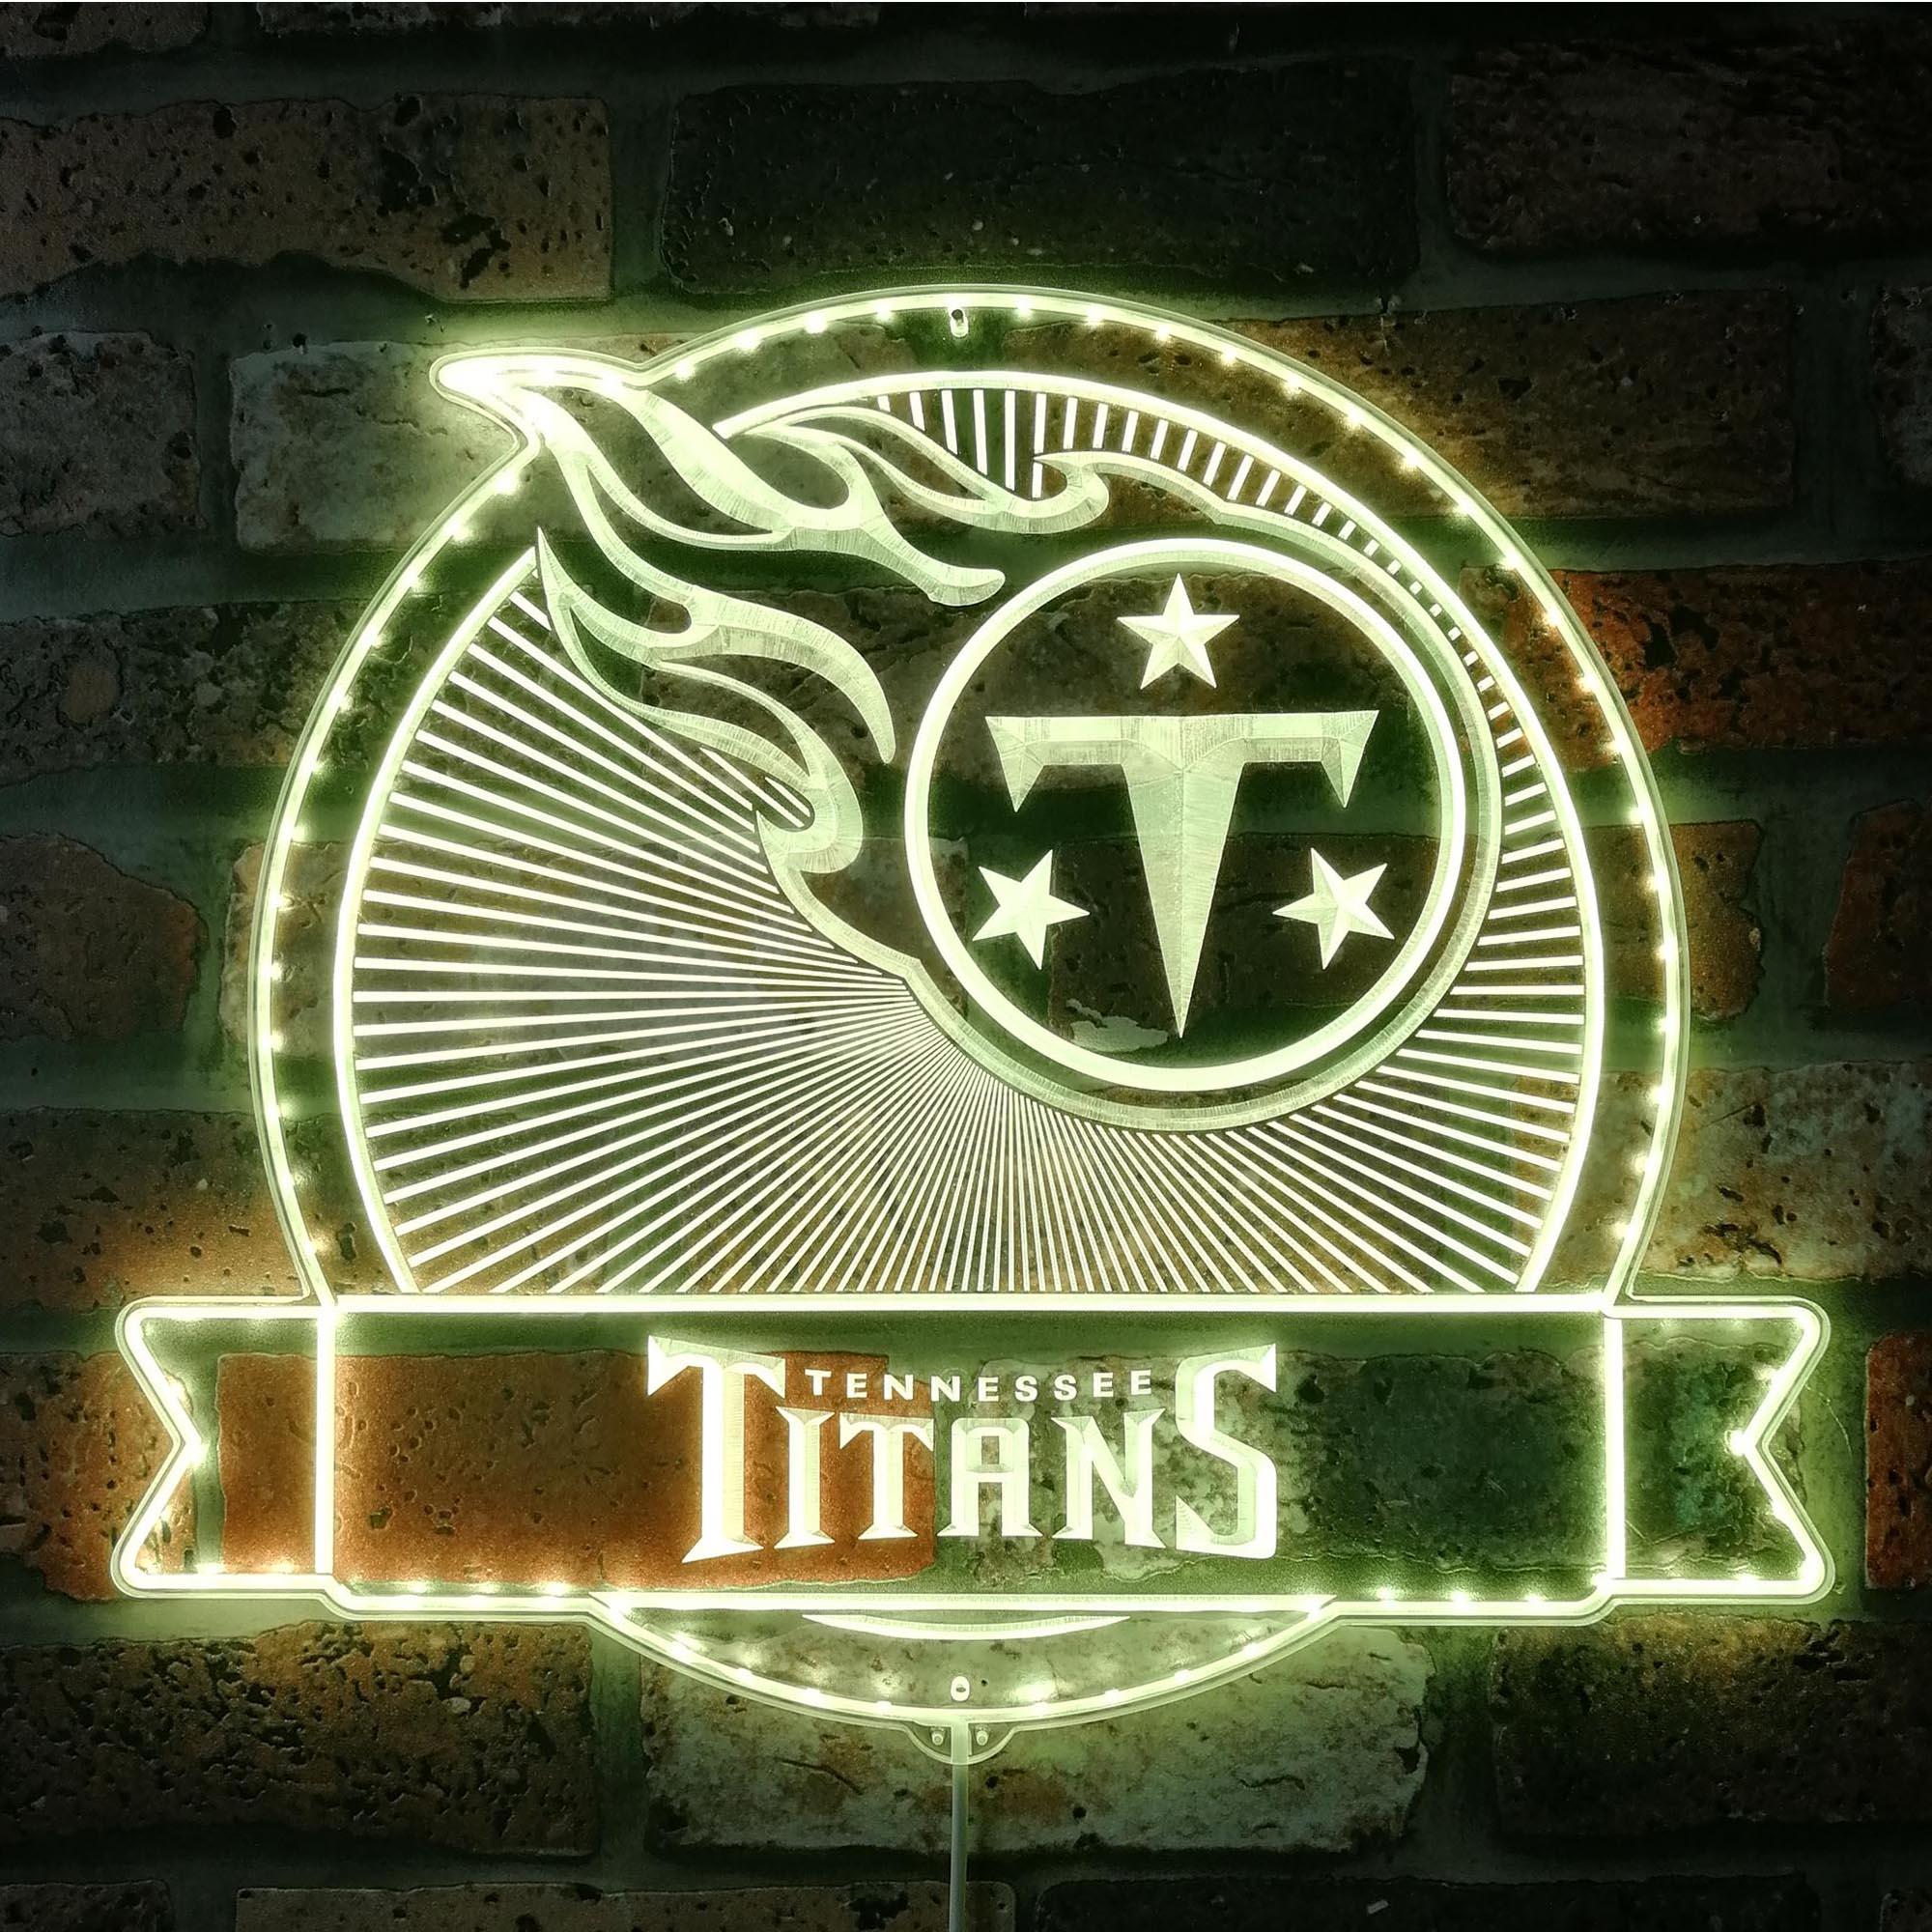 Tennessee Titans Dynamic RGB Edge Lit LED Sign